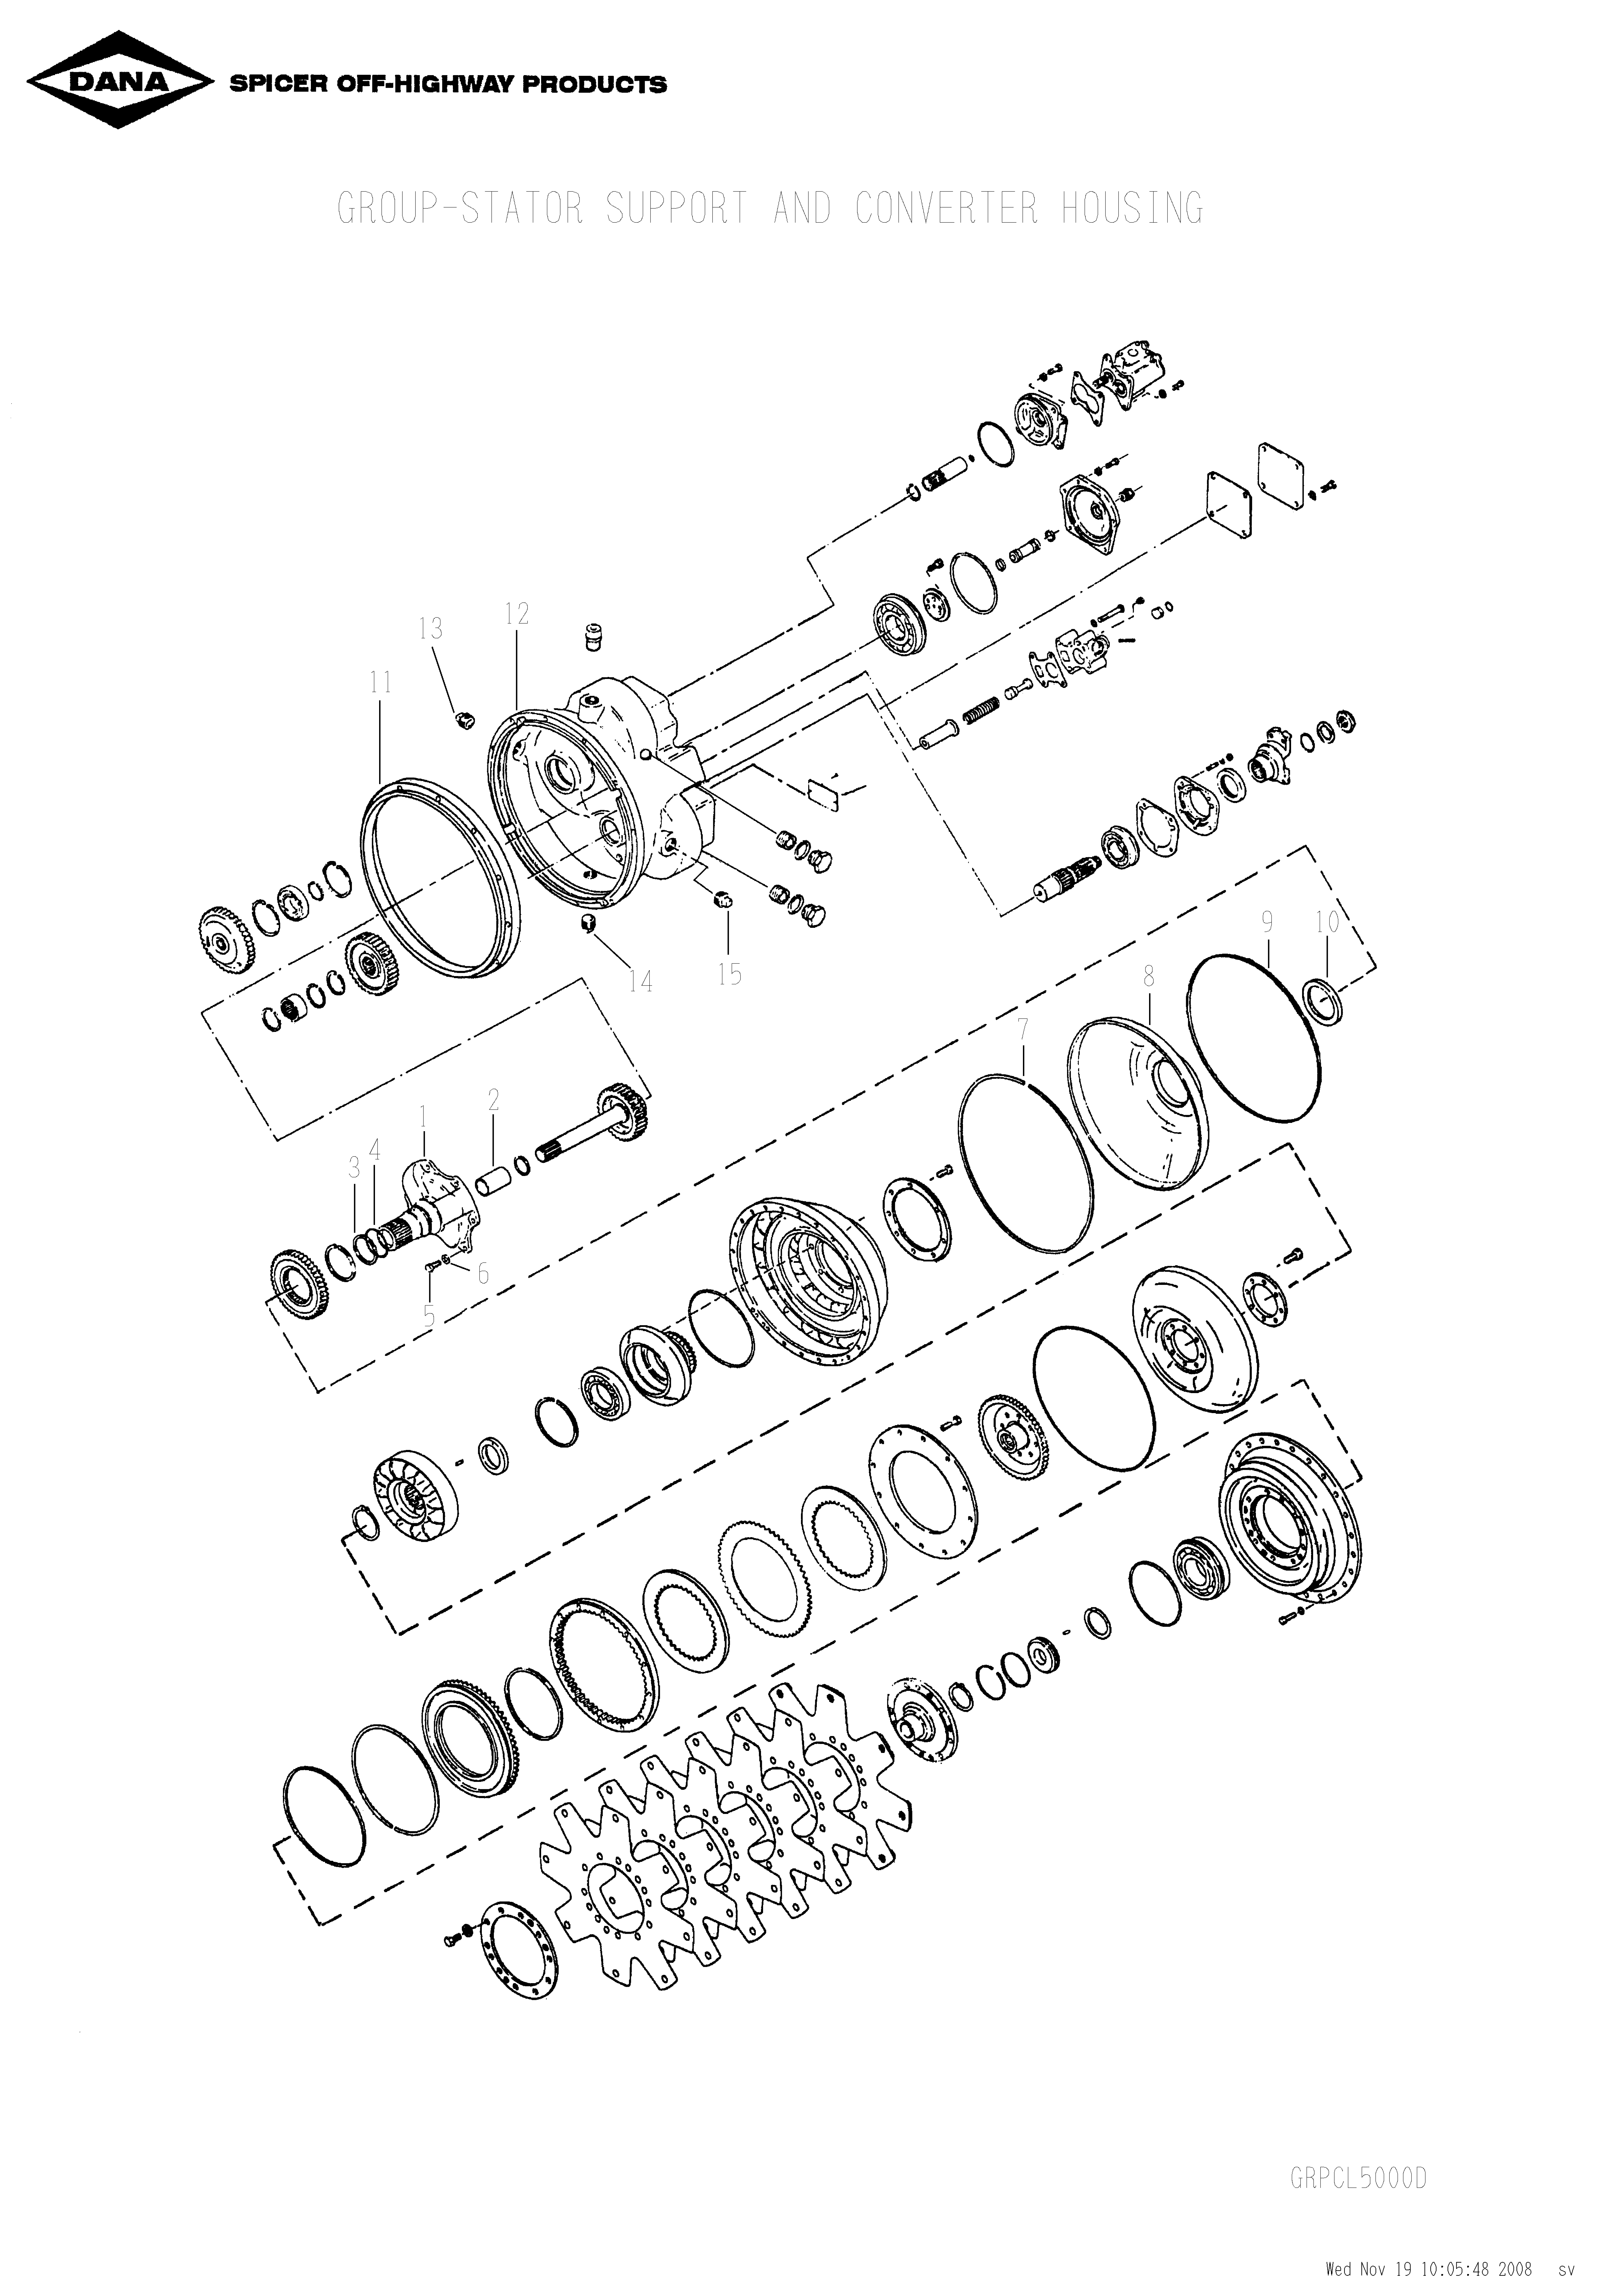 drawing for SCHOEMA, SCHOETTLER MASCHINENFABRIK K24.000247 - PISTON RING (figure 2)